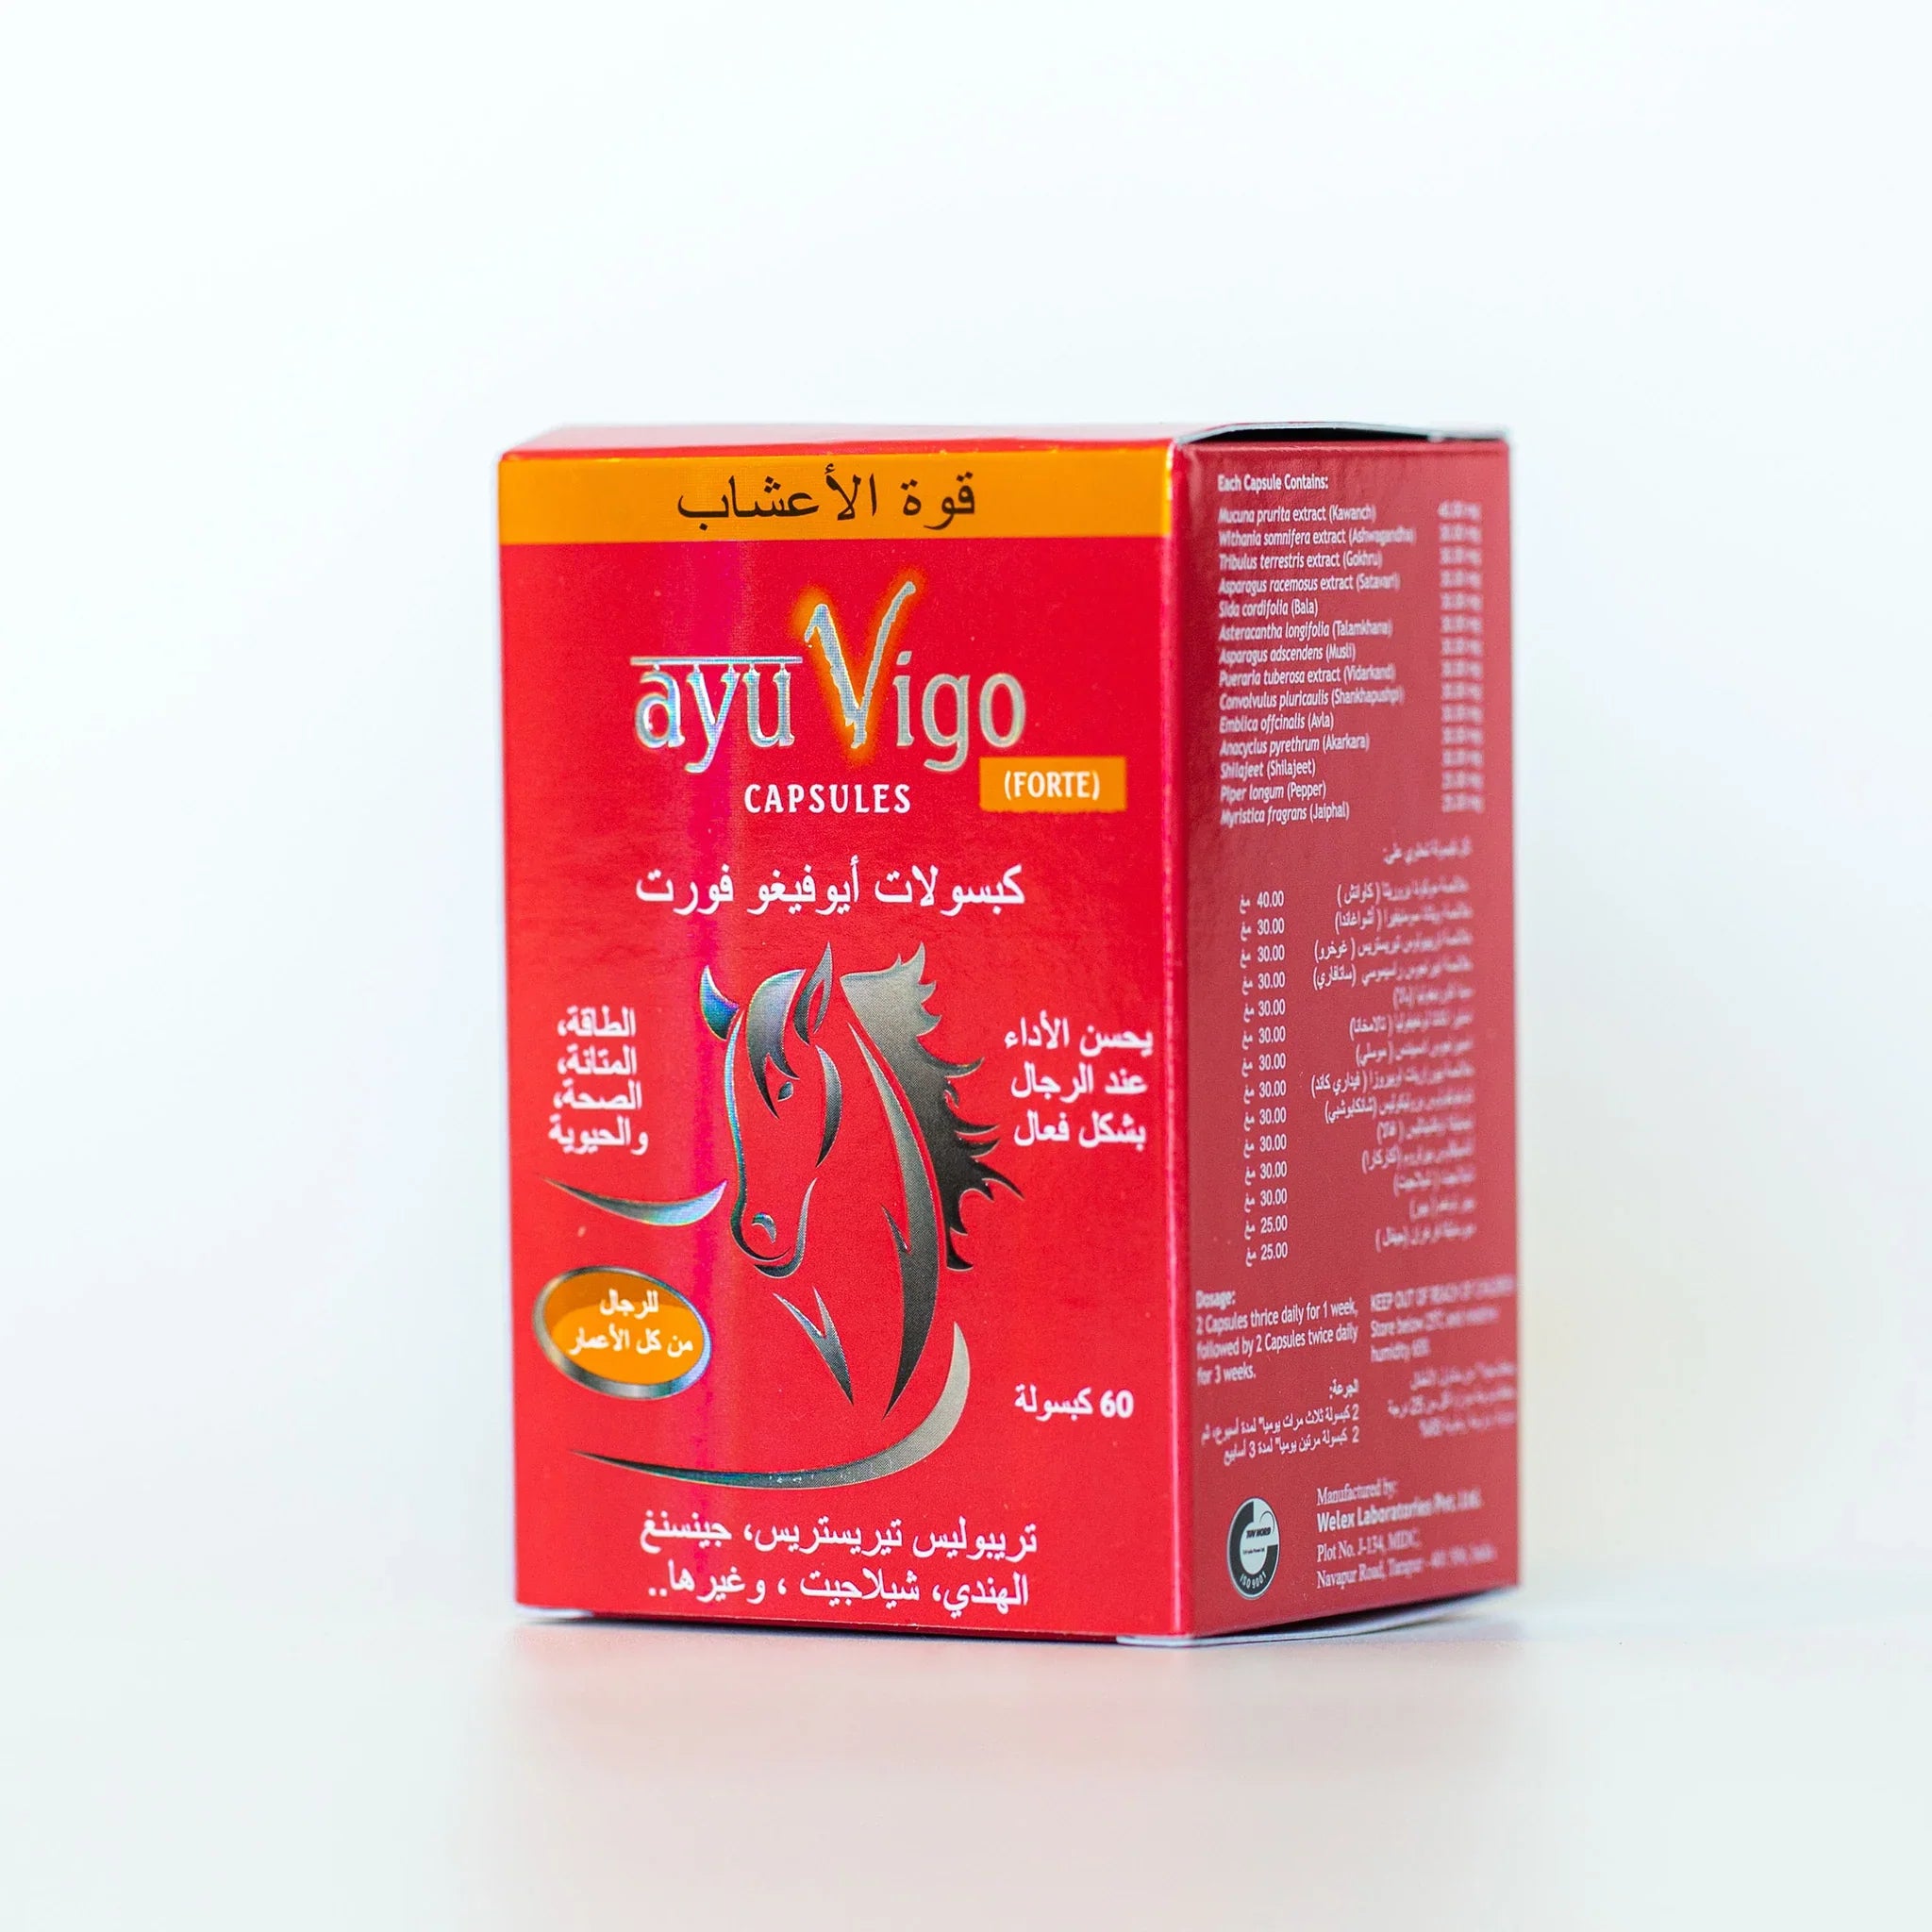 Ayuvigo and Dabur Shilajit Combo Supplement